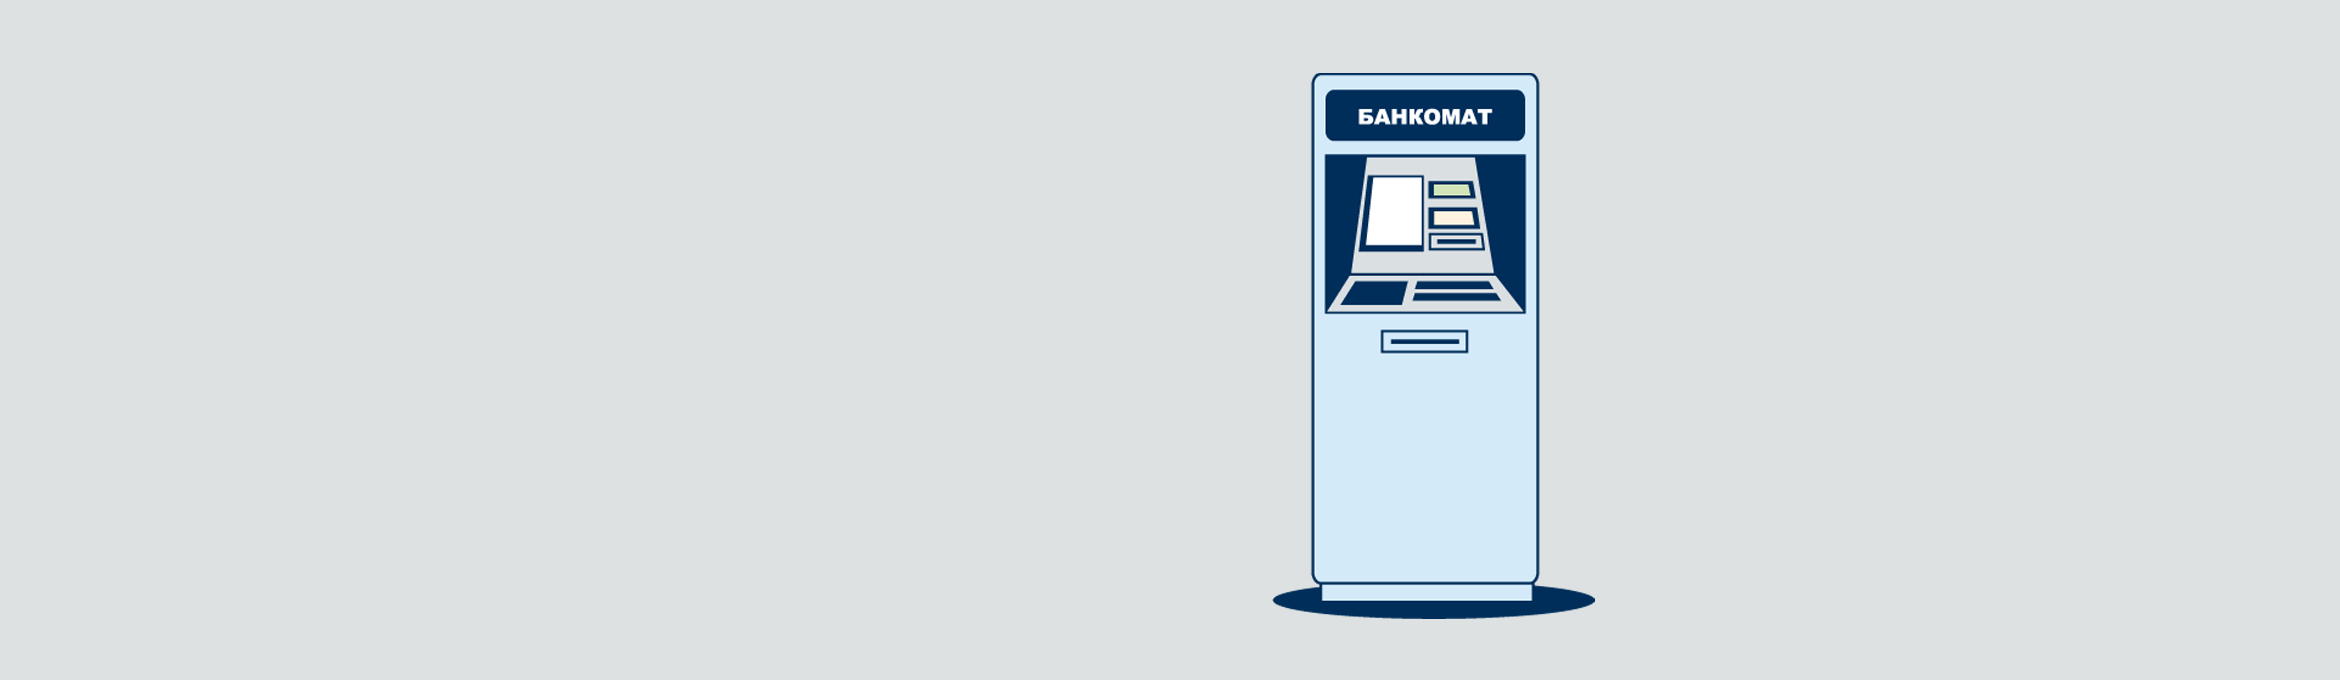 Платежи и банкоматы